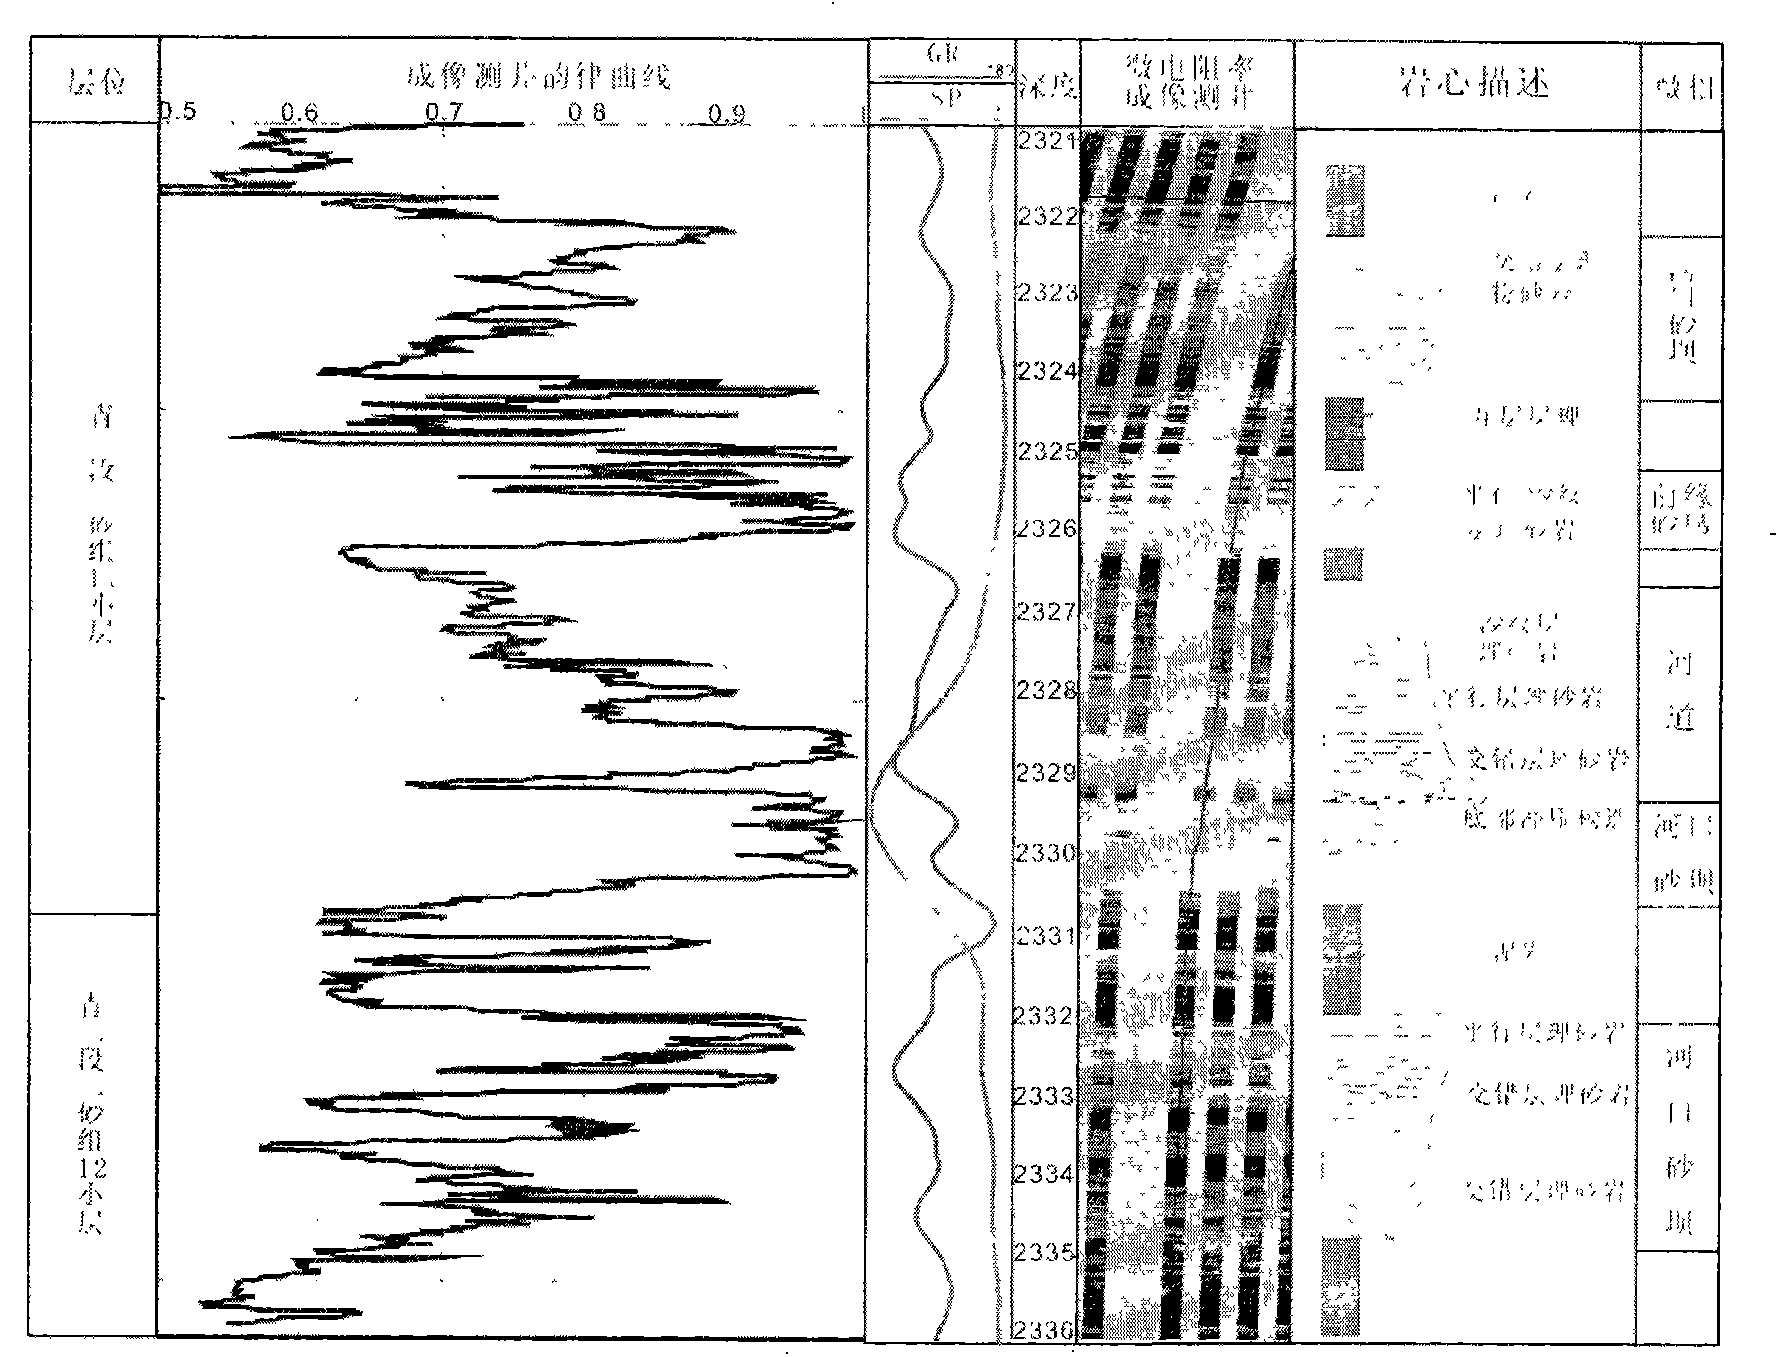 Method for recognizing petrographic rhythm change in siltstone and mudstone alternate stratum through imaging logging image